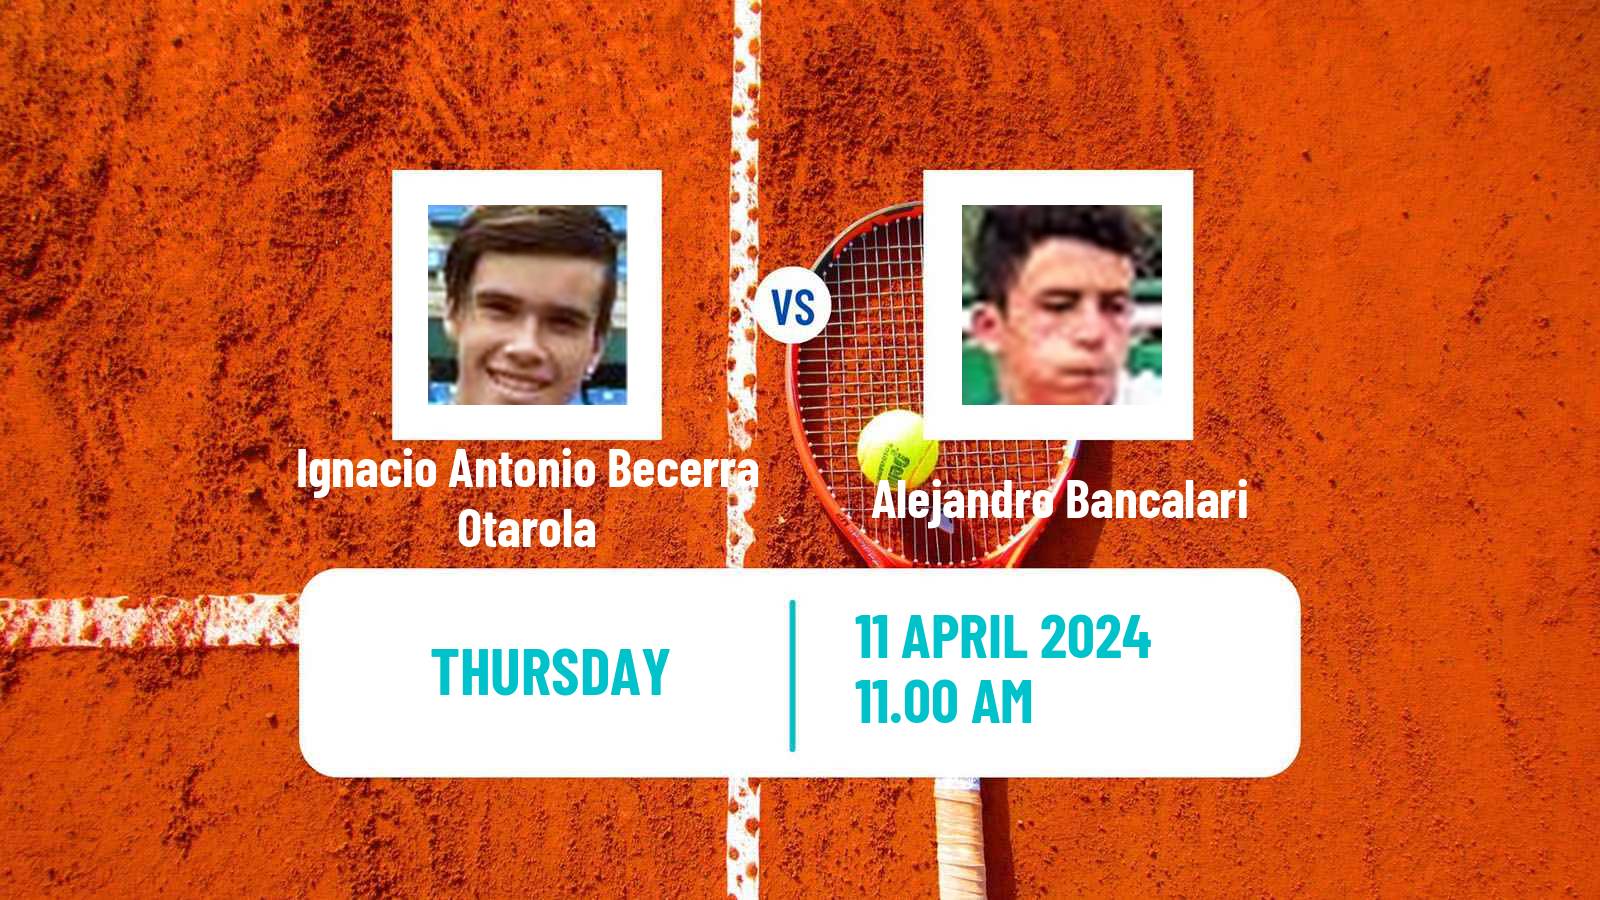 Tennis ITF M15 Quillota Men Ignacio Antonio Becerra Otarola - Alejandro Bancalari